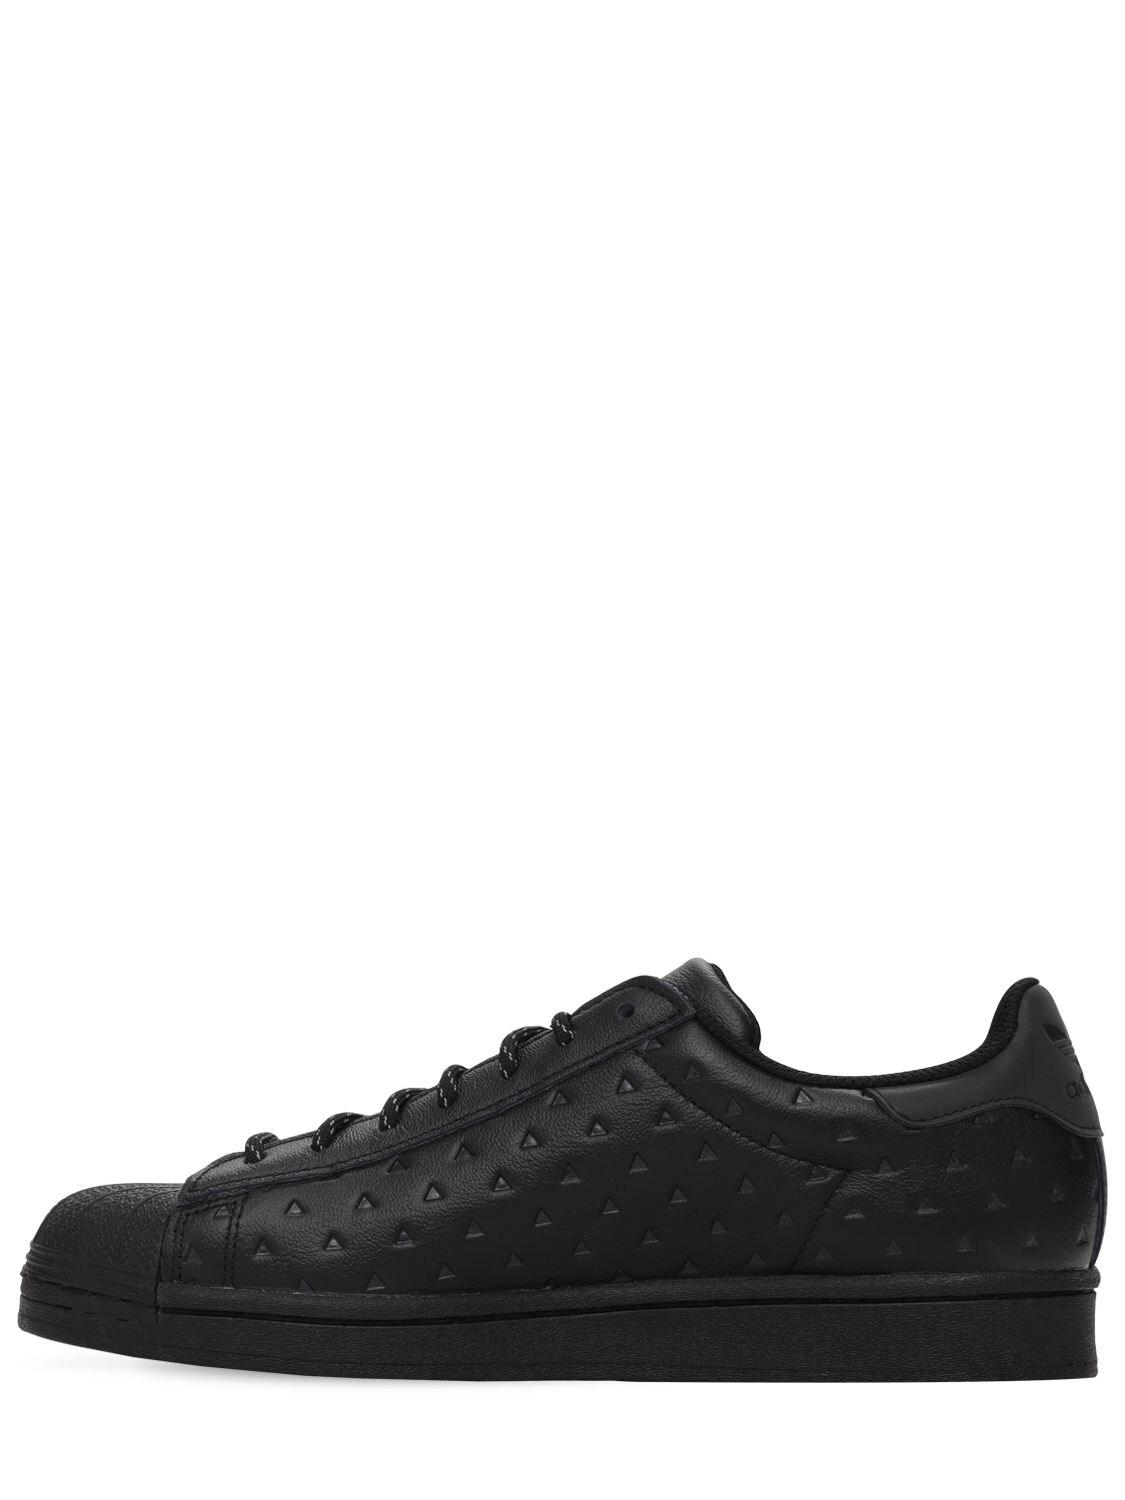  adidas Pharrell Williams Superstar Shoes Men's, Black, Size 4